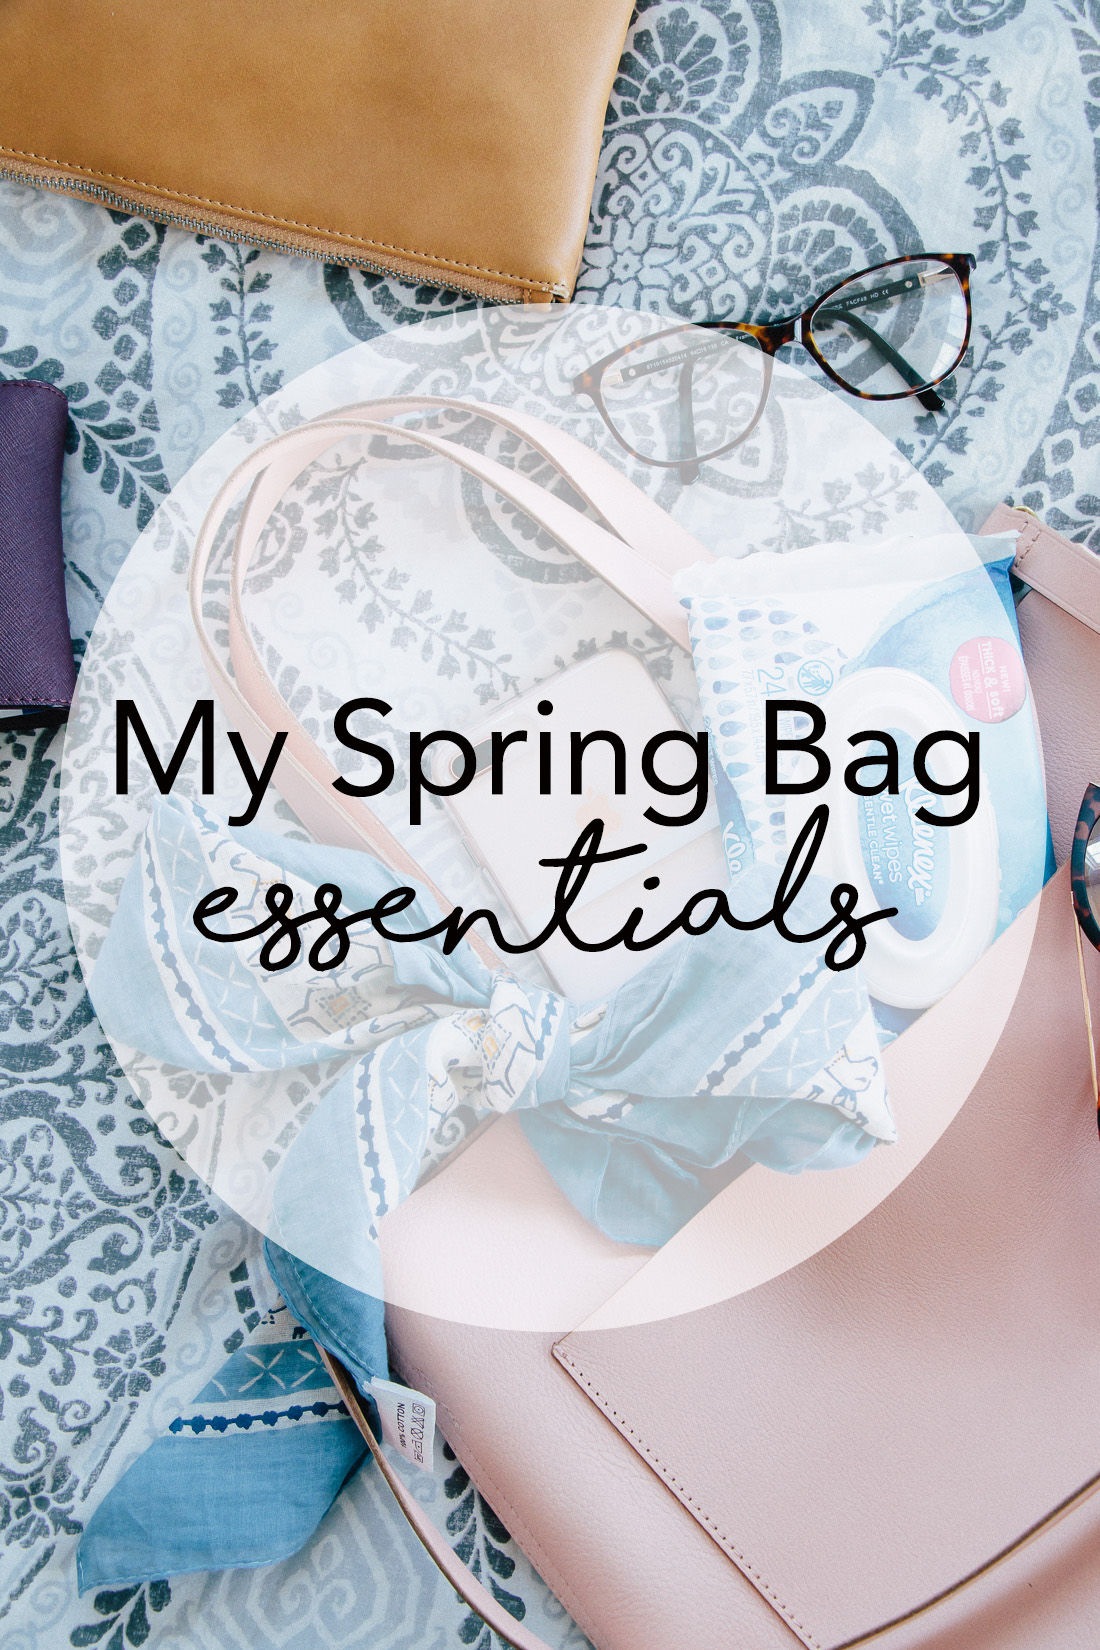 My Spring bag essentials 